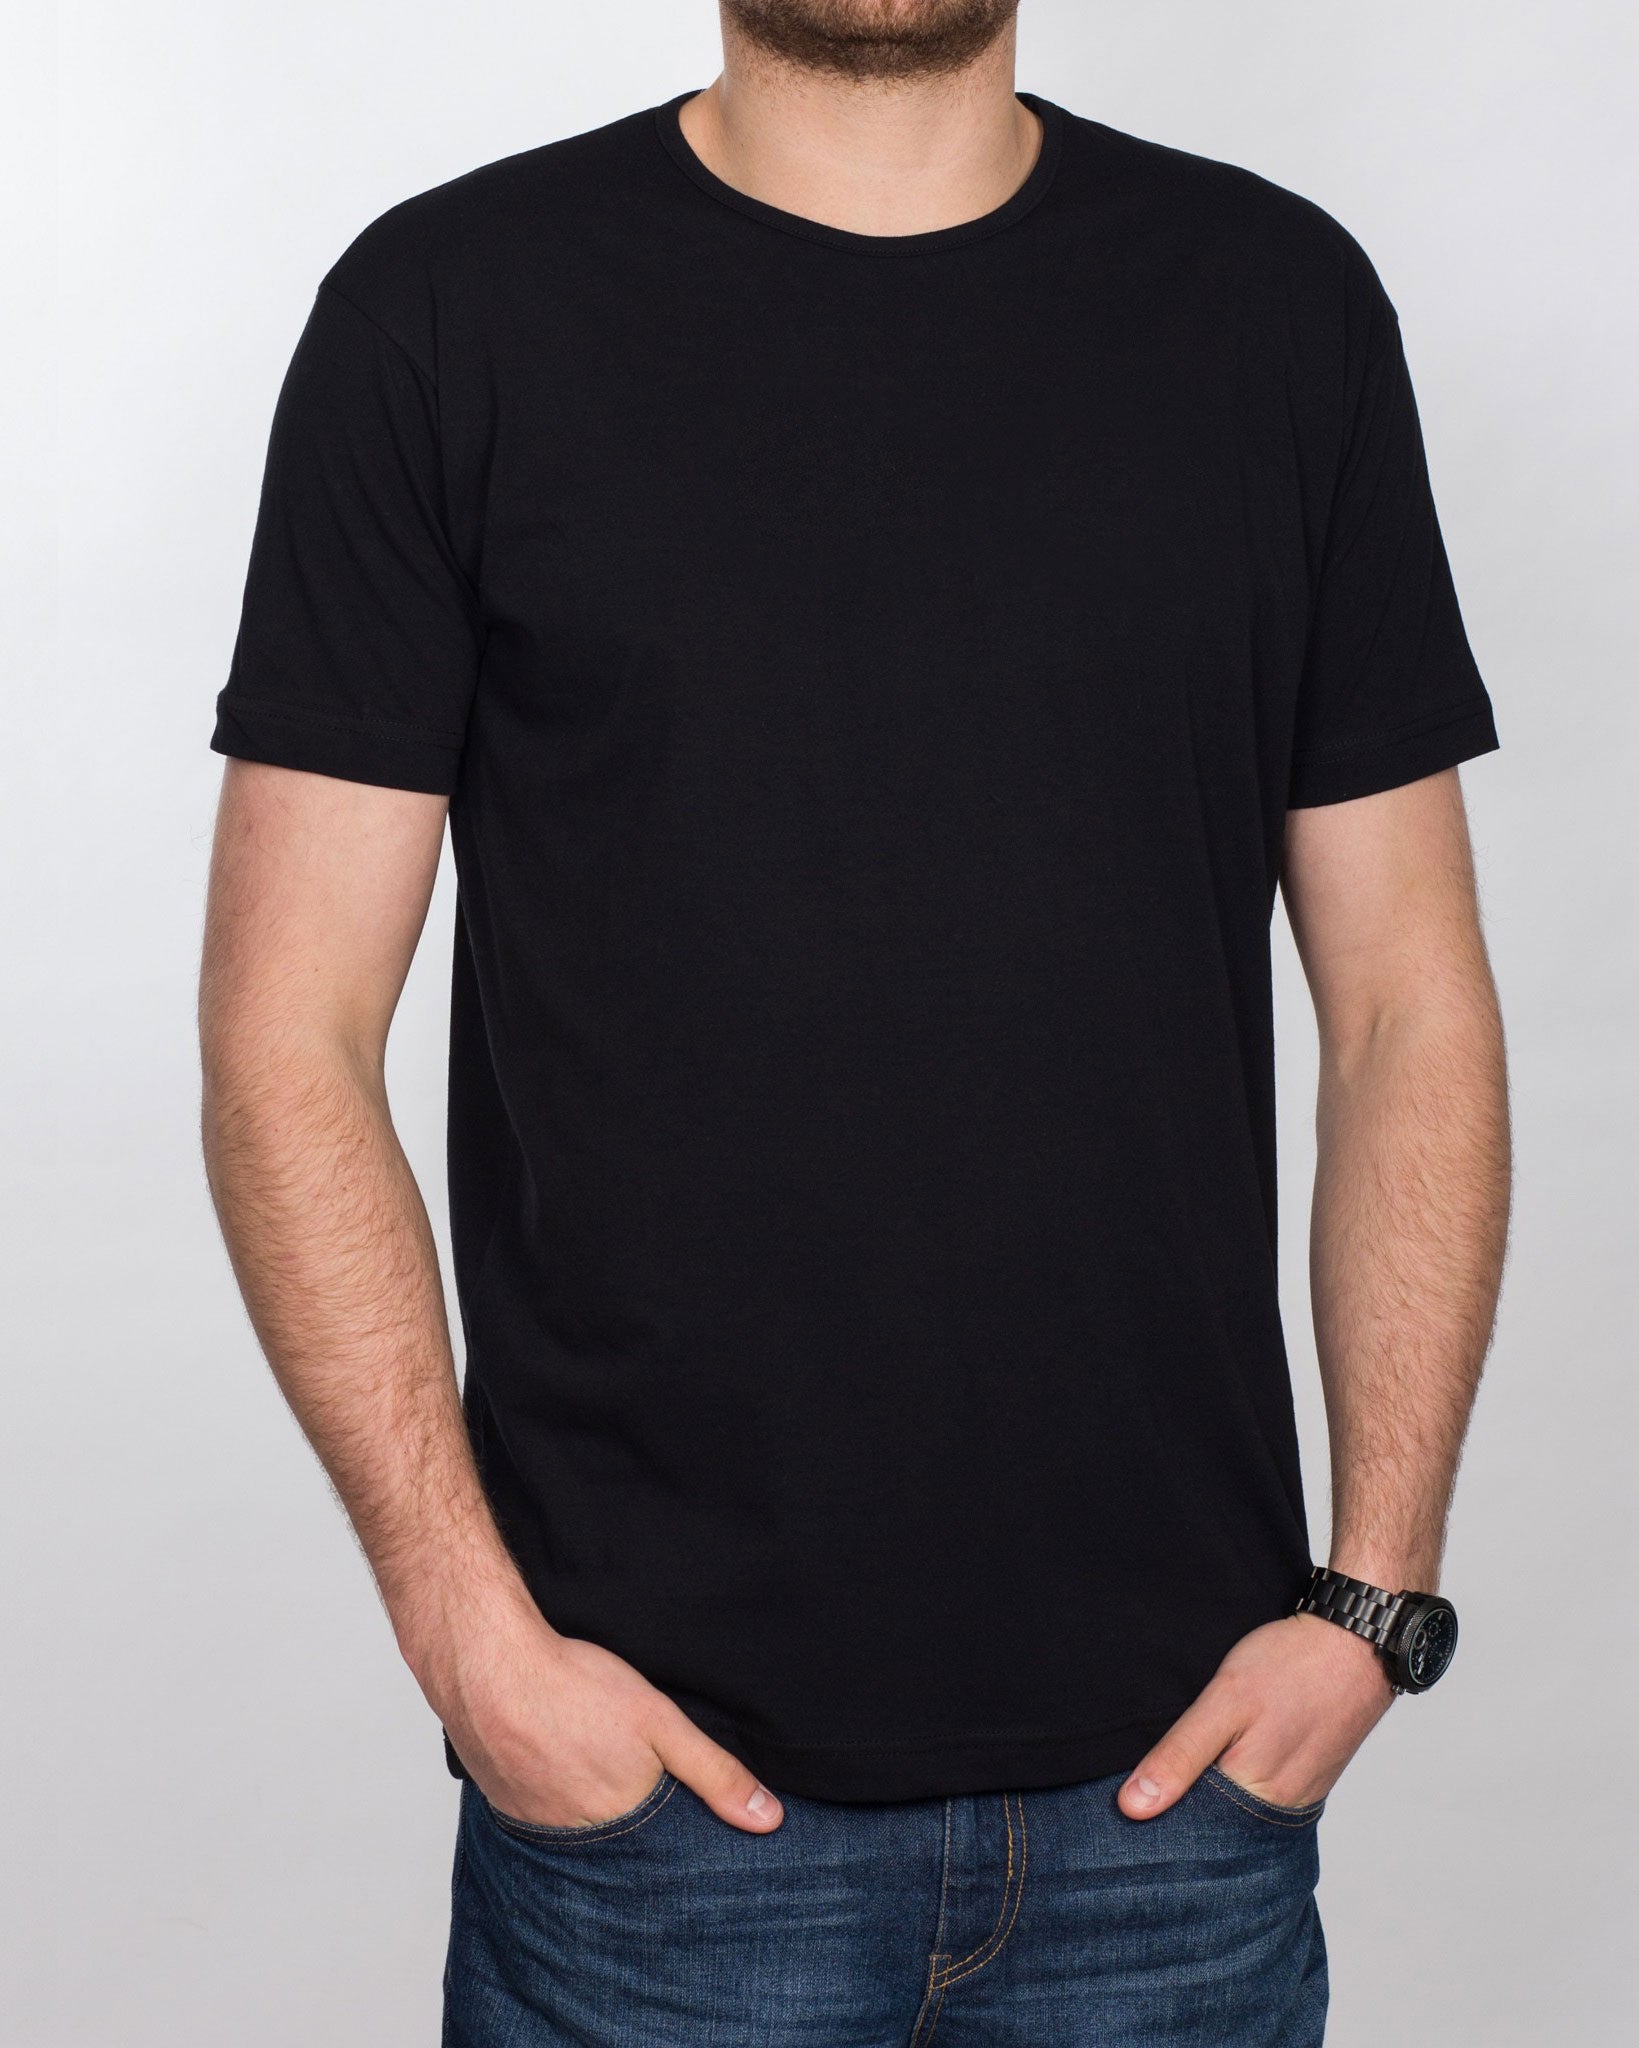 2t Tall T-Shirt (plain black)